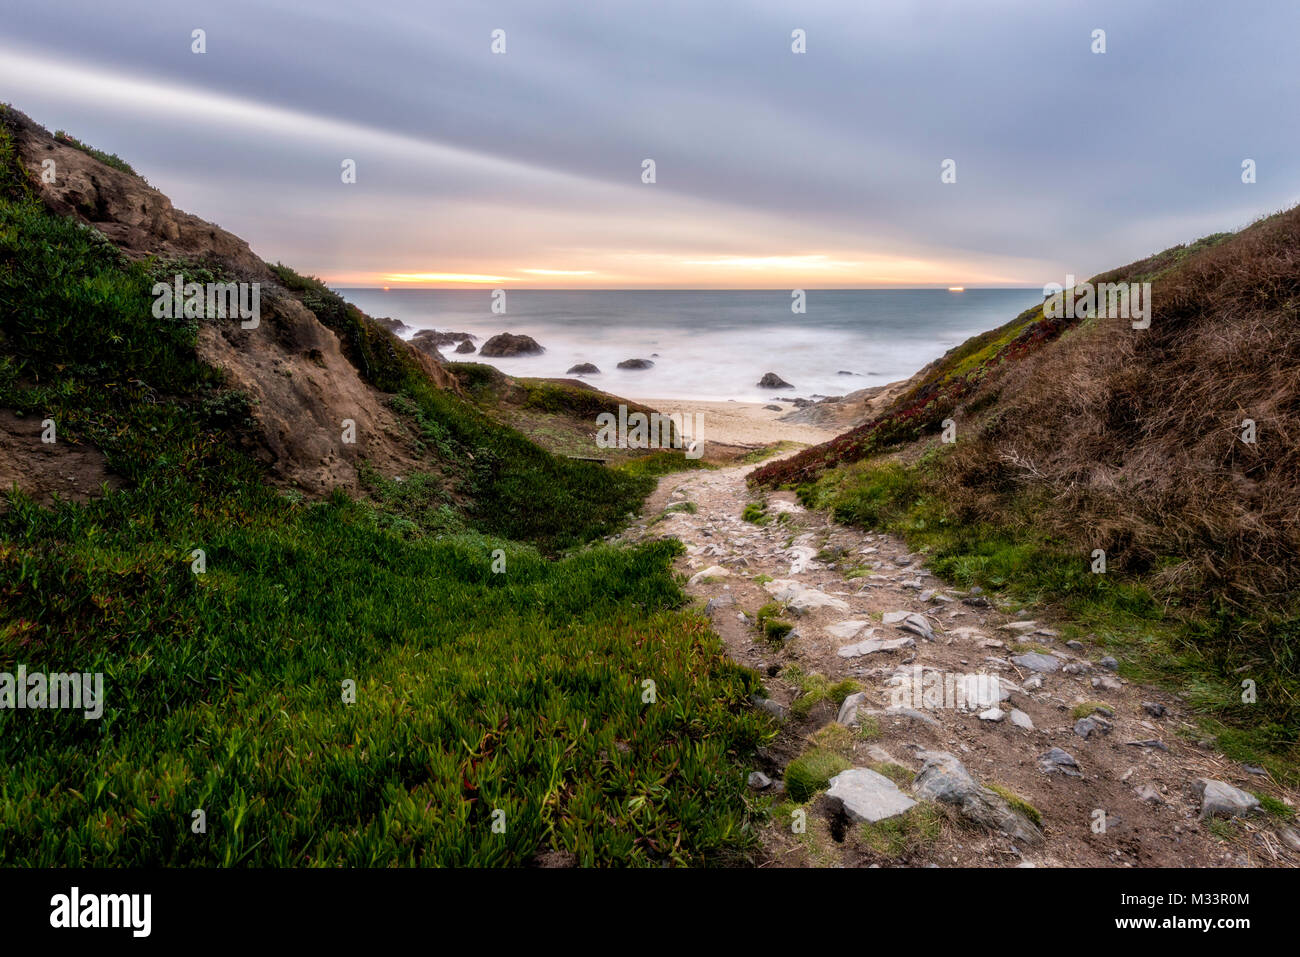 A rocky path leads down to the beach at Bodega Head near Bodega Bay at sunset, California. Stock Photo